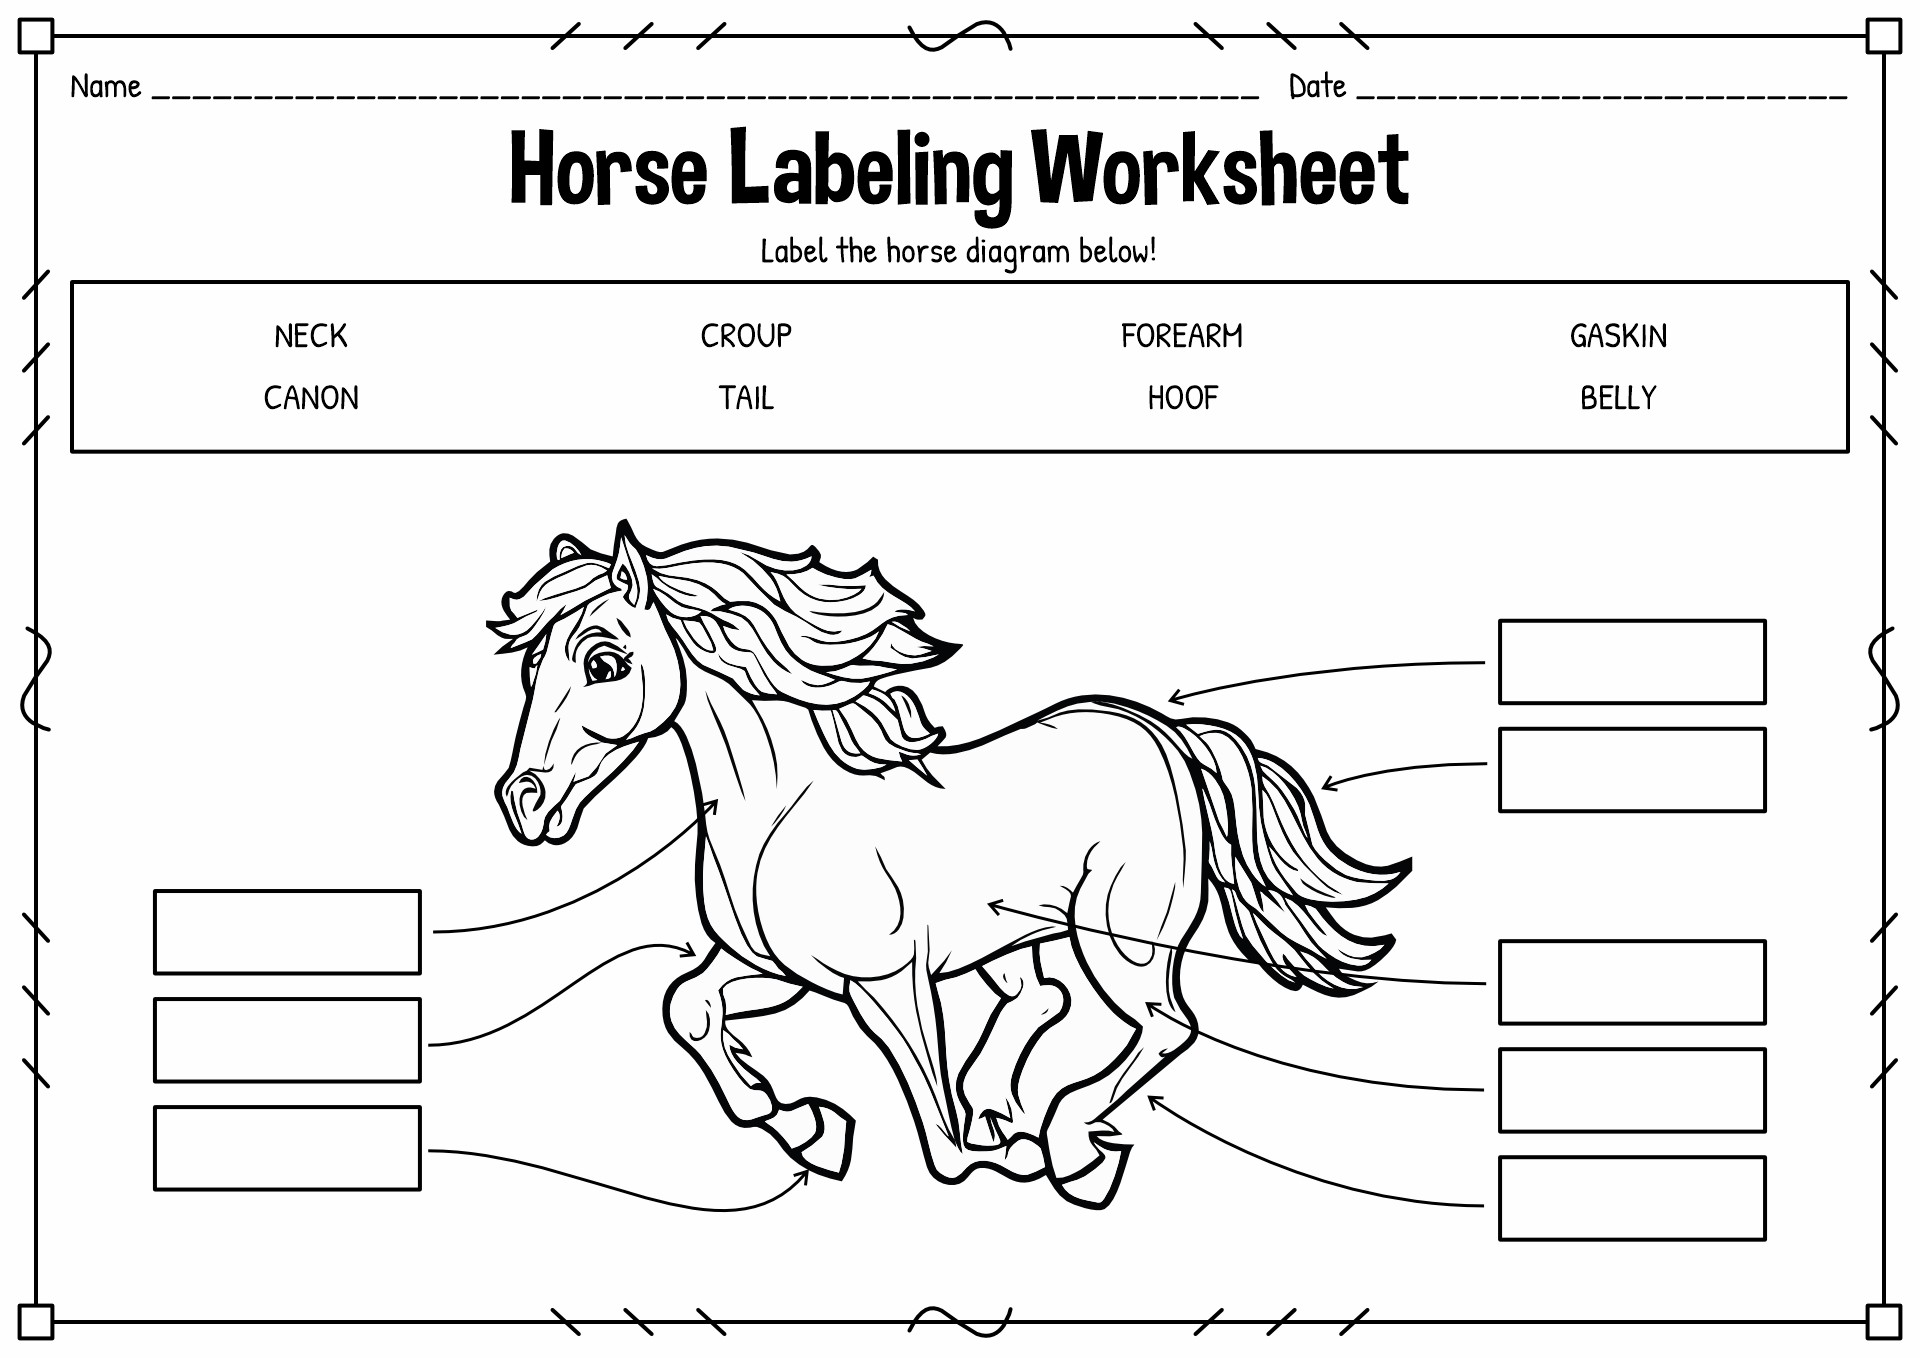 Horse Labeling Worksheet Image